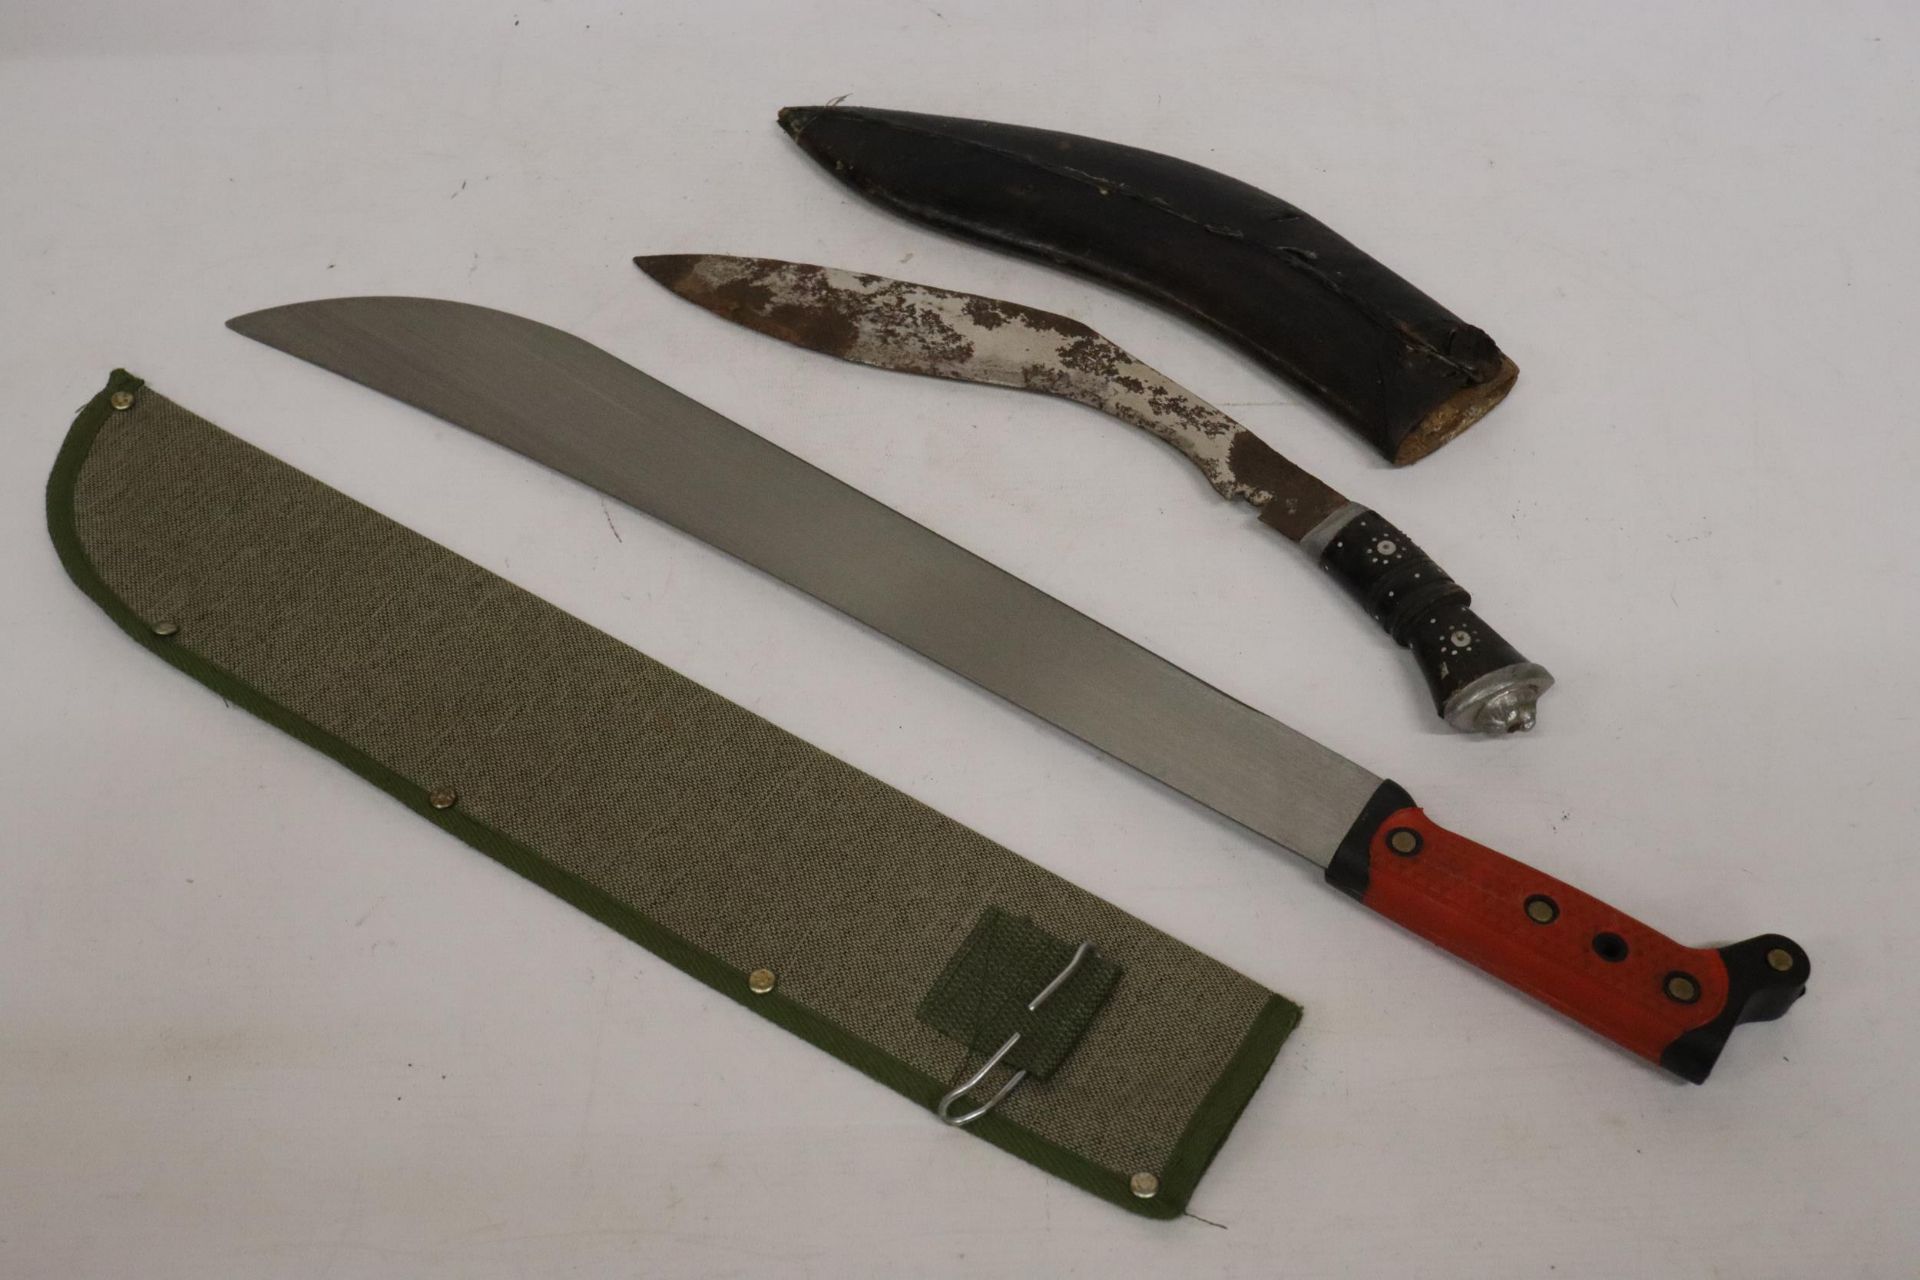 A VINTAGE GURKAH KUKRI KNIFE AND A MACHETE, BOTH IN SHEATHS